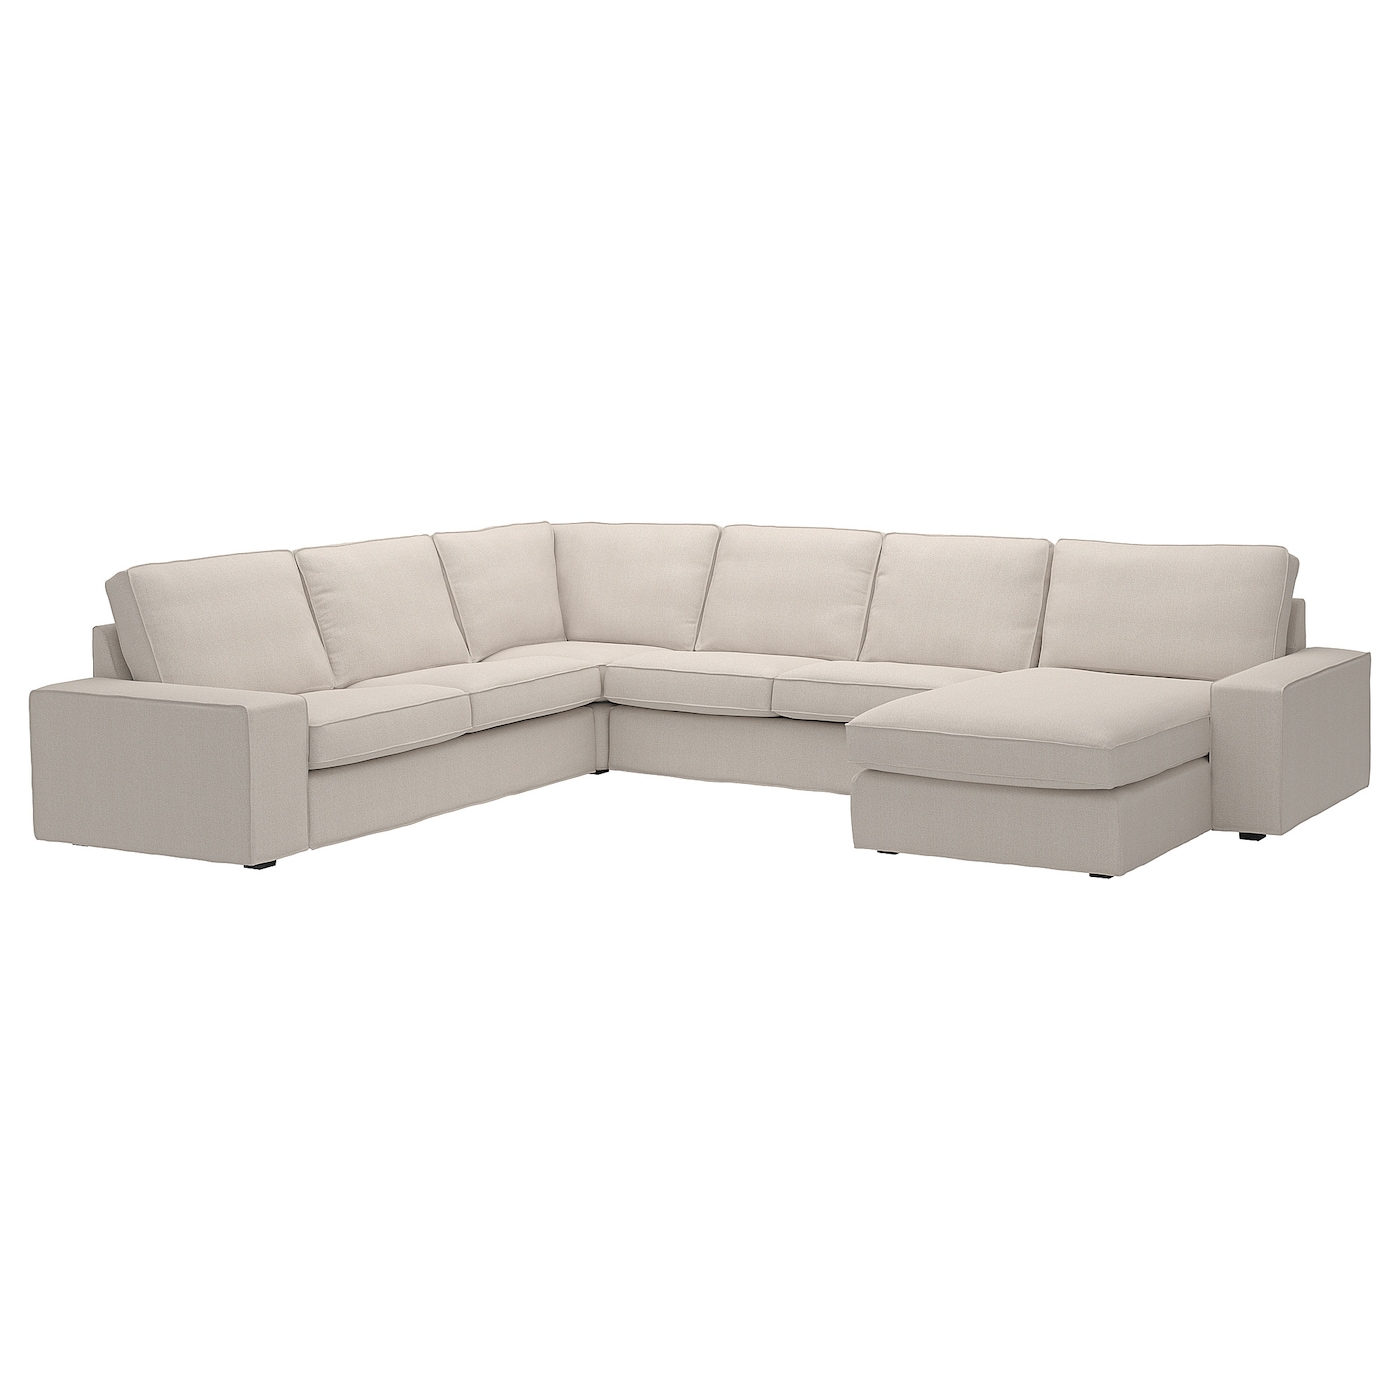 КИВИК Диван угловой, 5-местный. диван+диван, Тресунд светло-бежевый KIVIK IKEA чехол на 2 местный диван ikea kivik светло серый